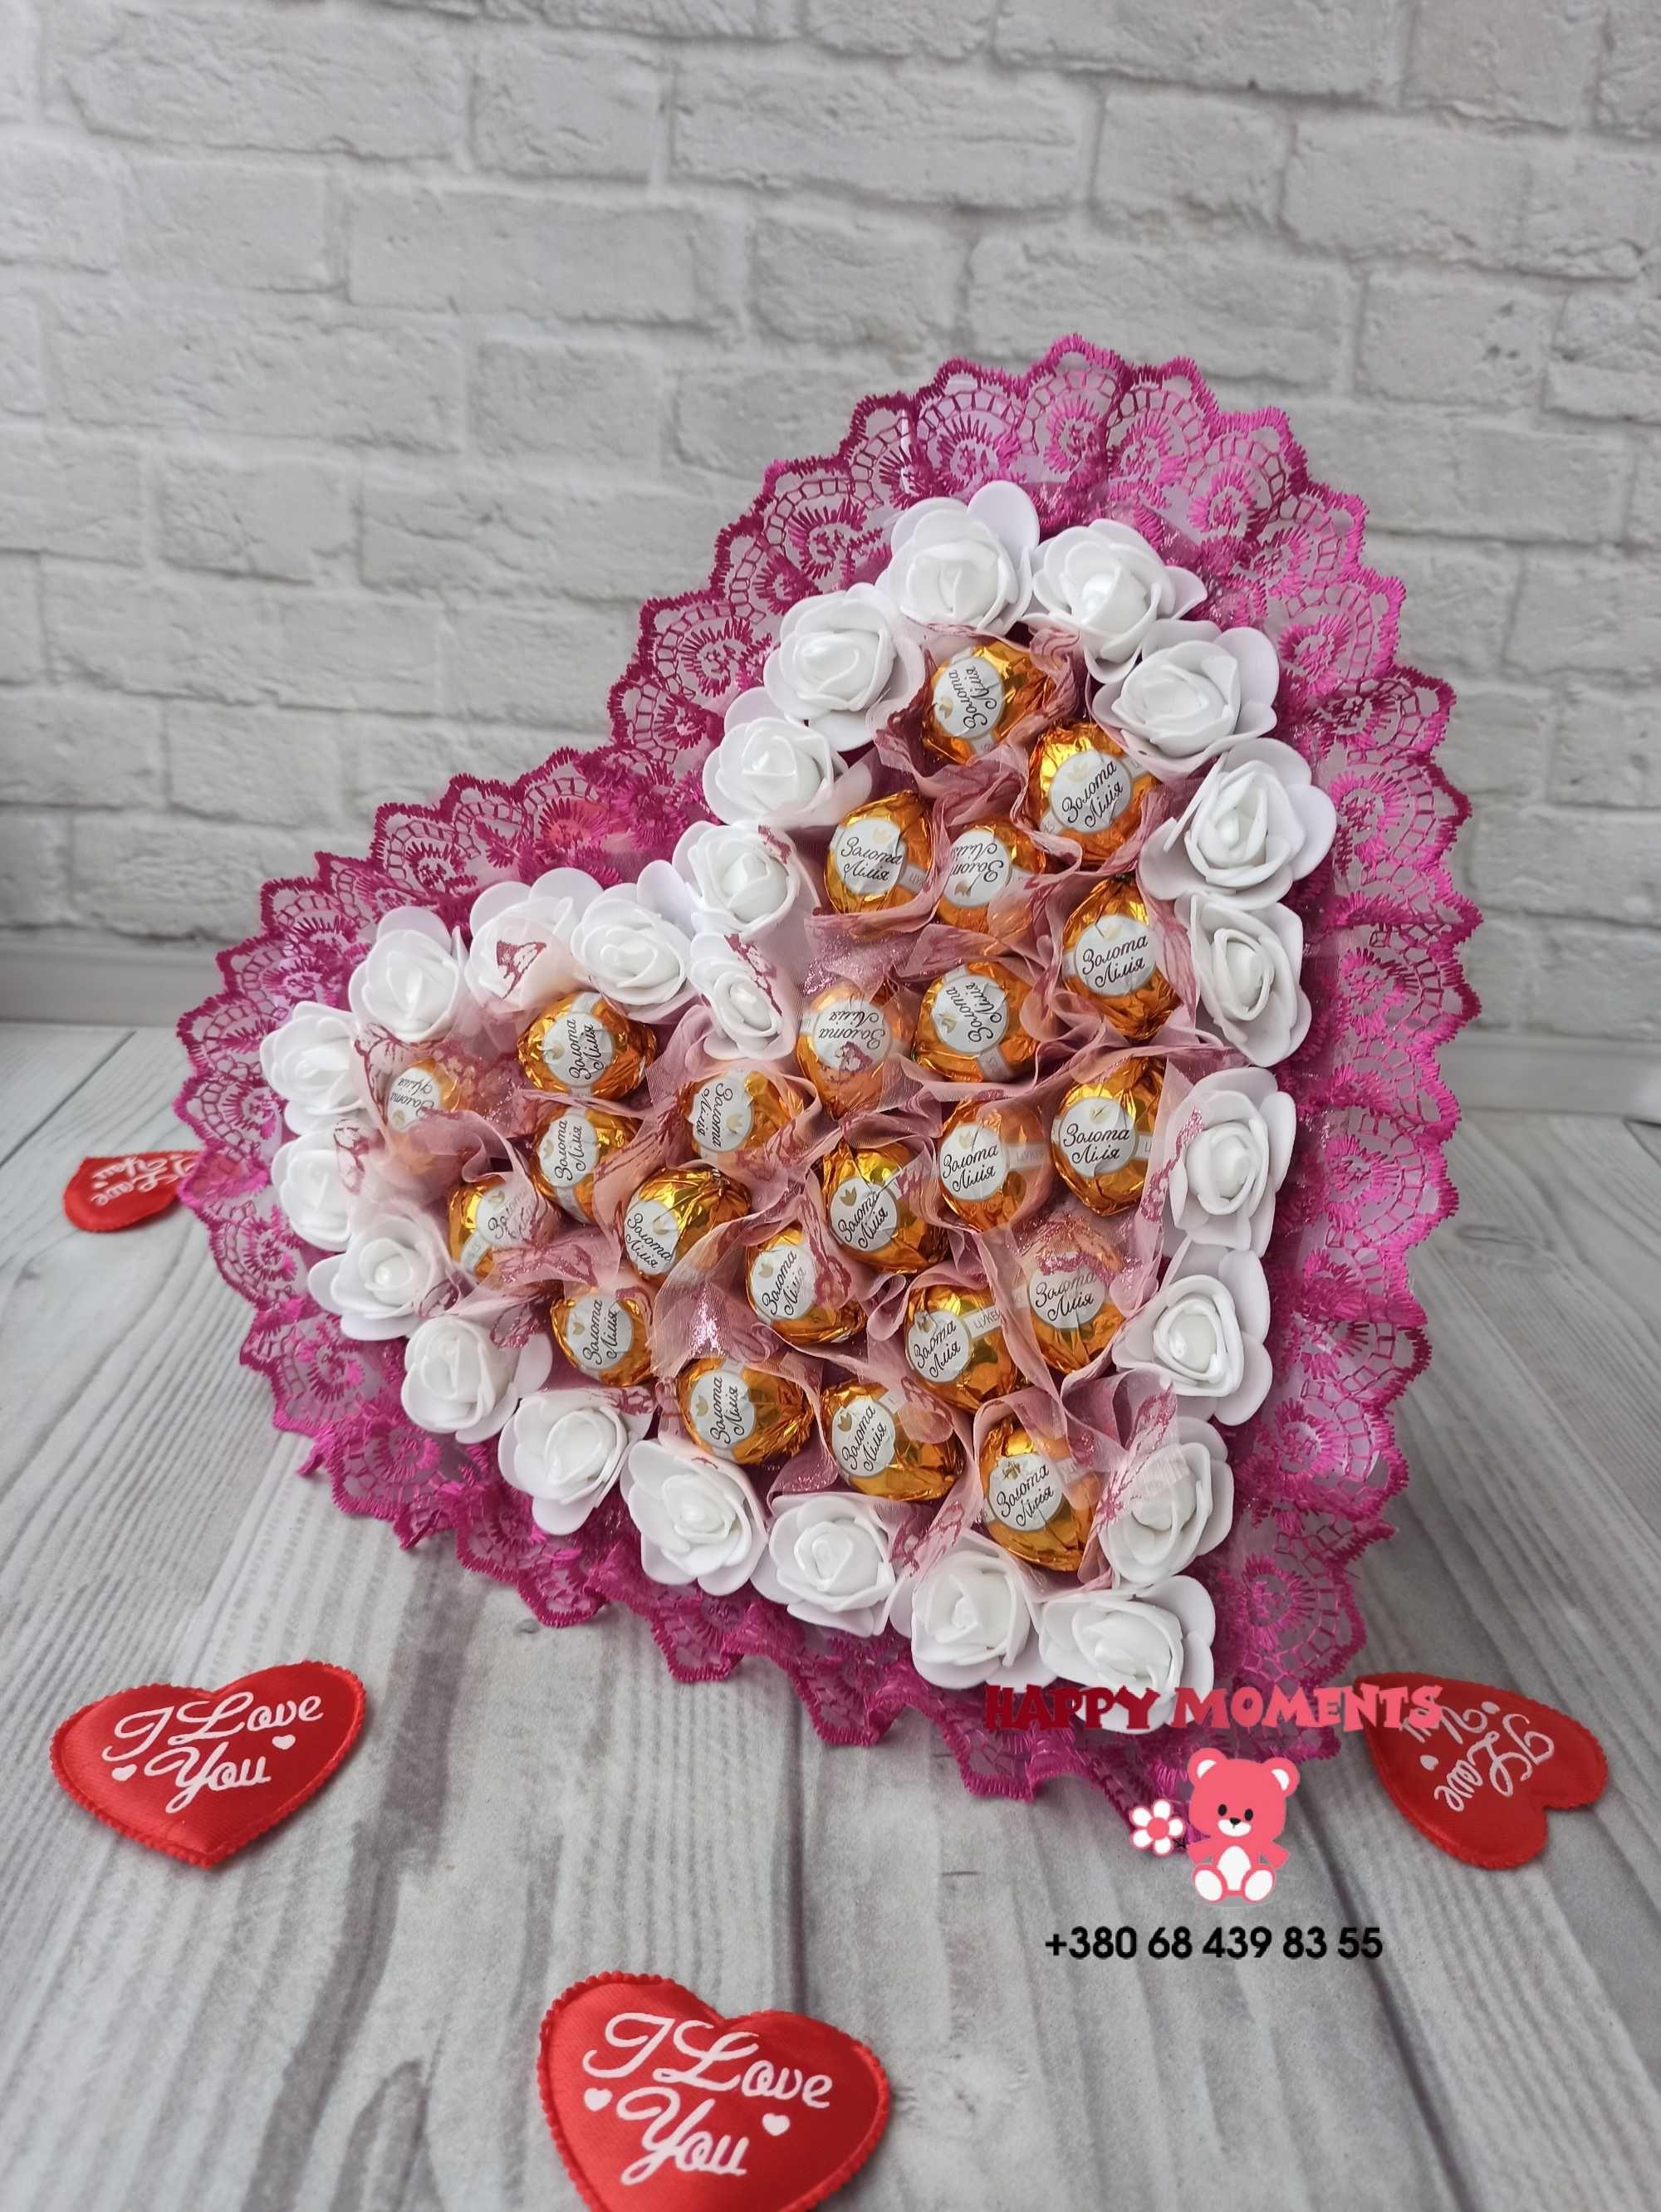 Букет із цукерками у формі серця 8 березня из конфет подарок